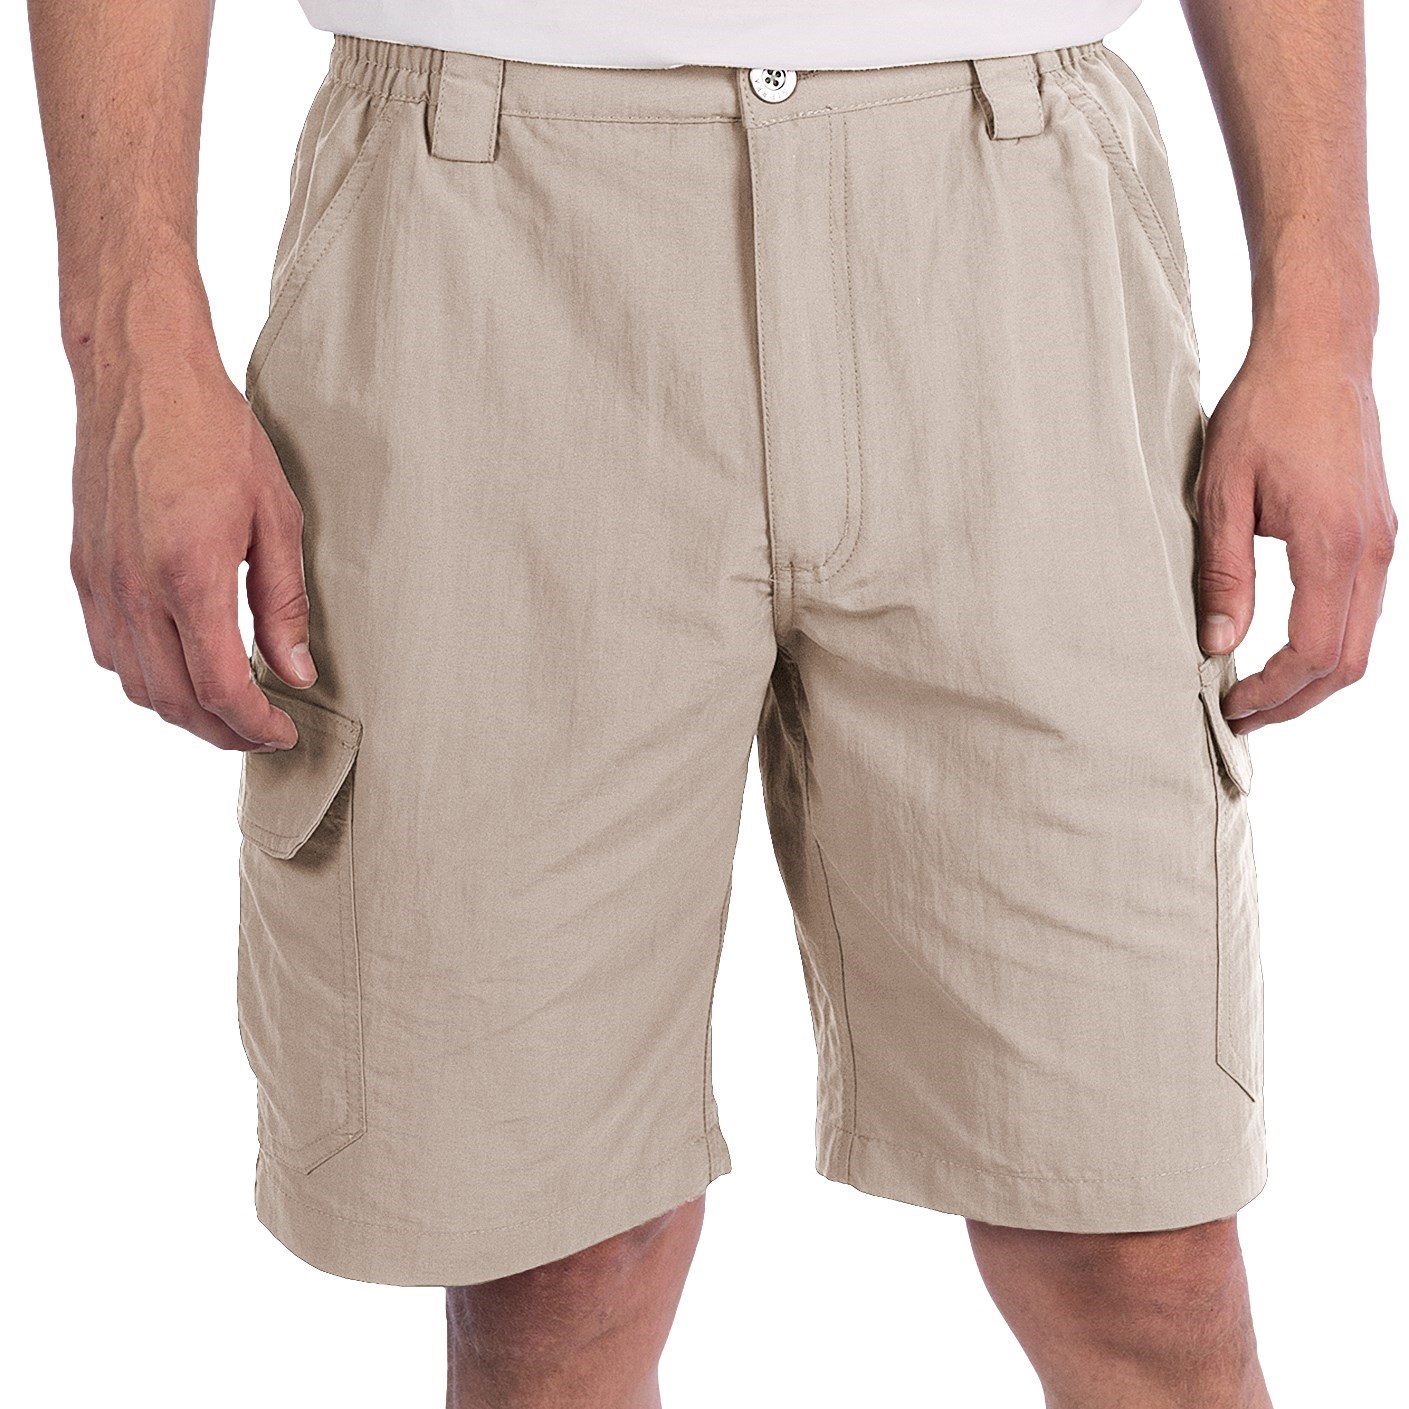 White Sierra Rocky Ridge Shorts (For Men) 5705H - Save 55%